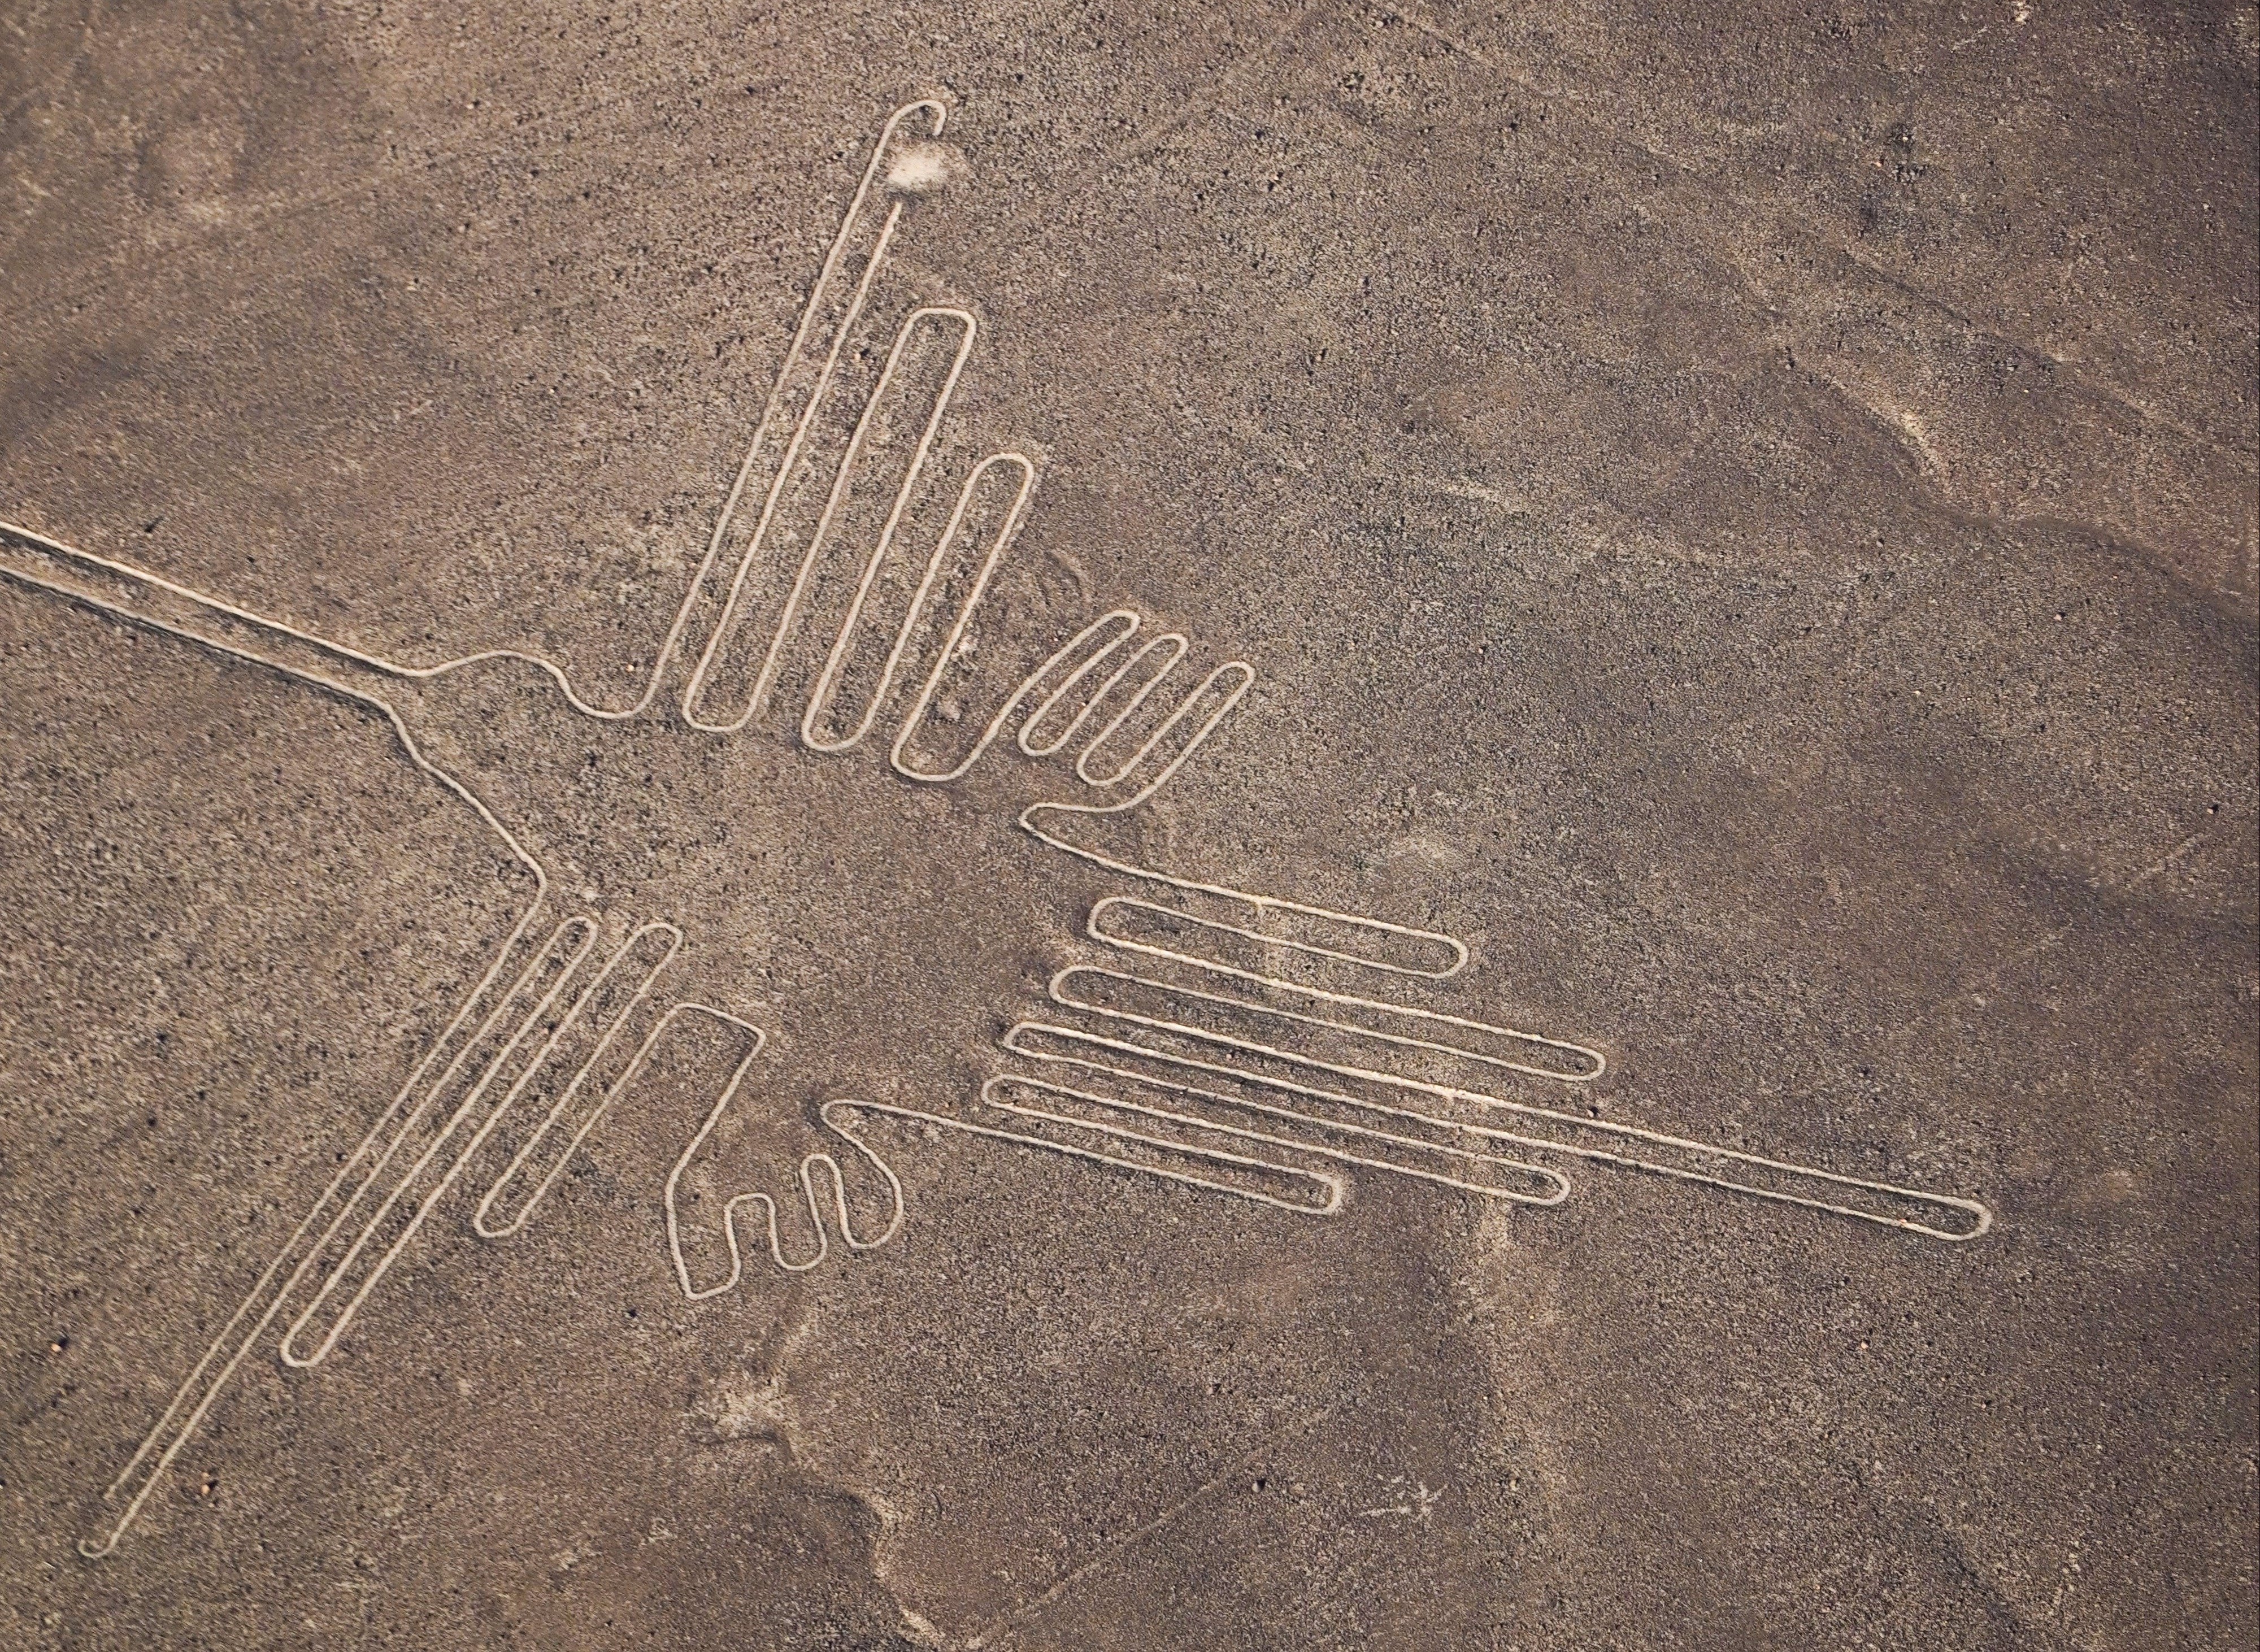 Nazca lines, Peru.